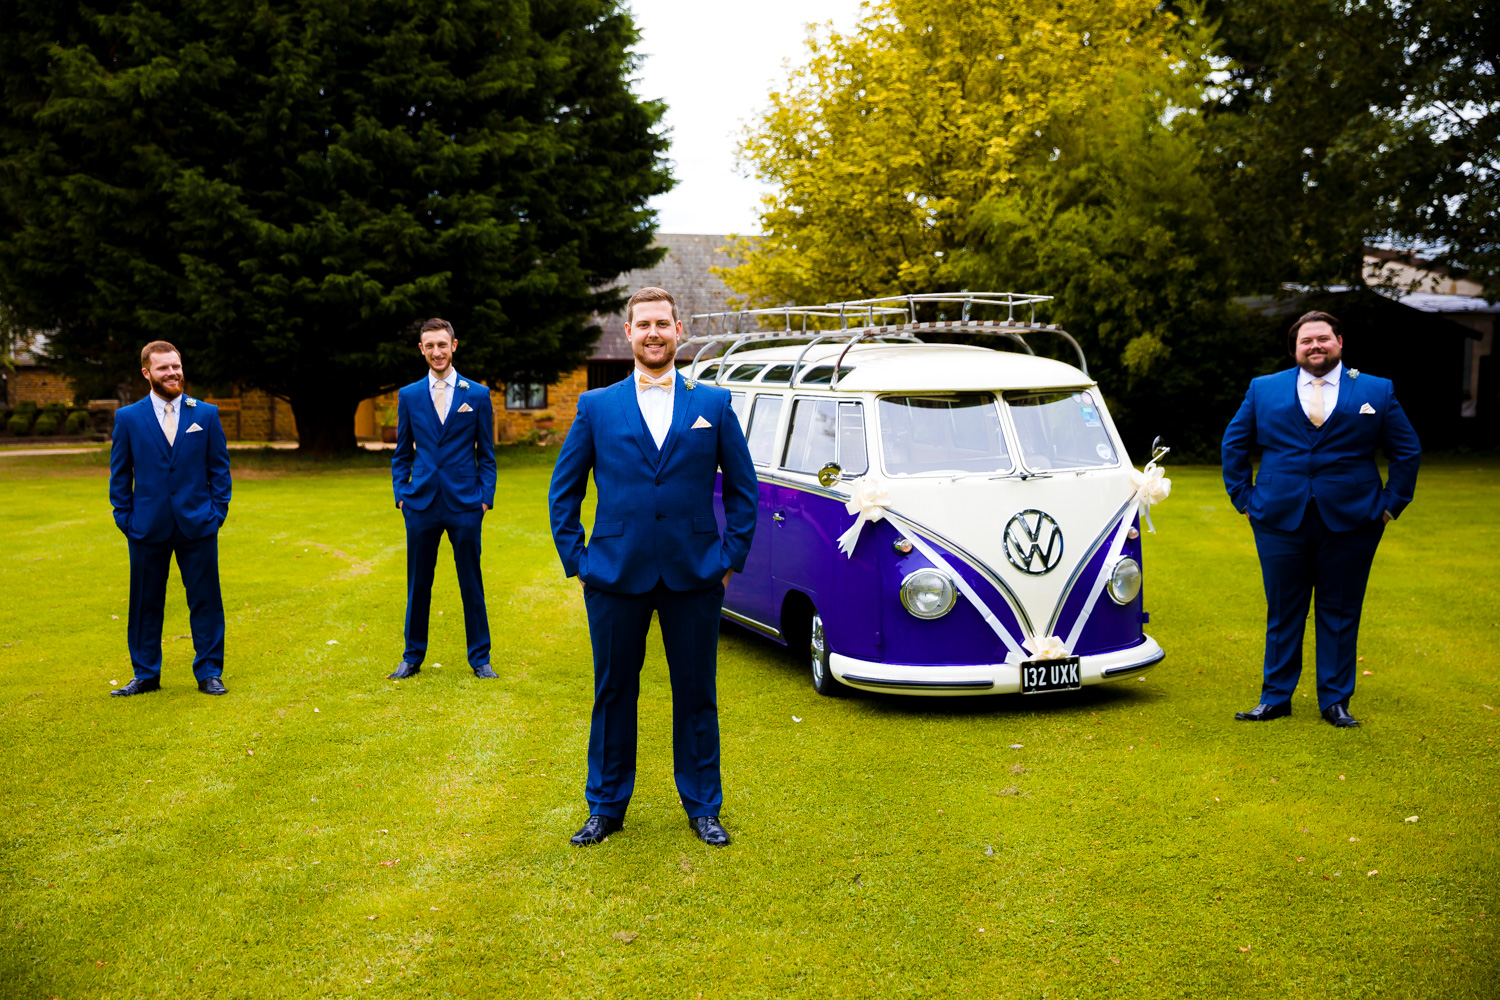 Elliot and the Groomsman posing outside the VW campervan wedding car